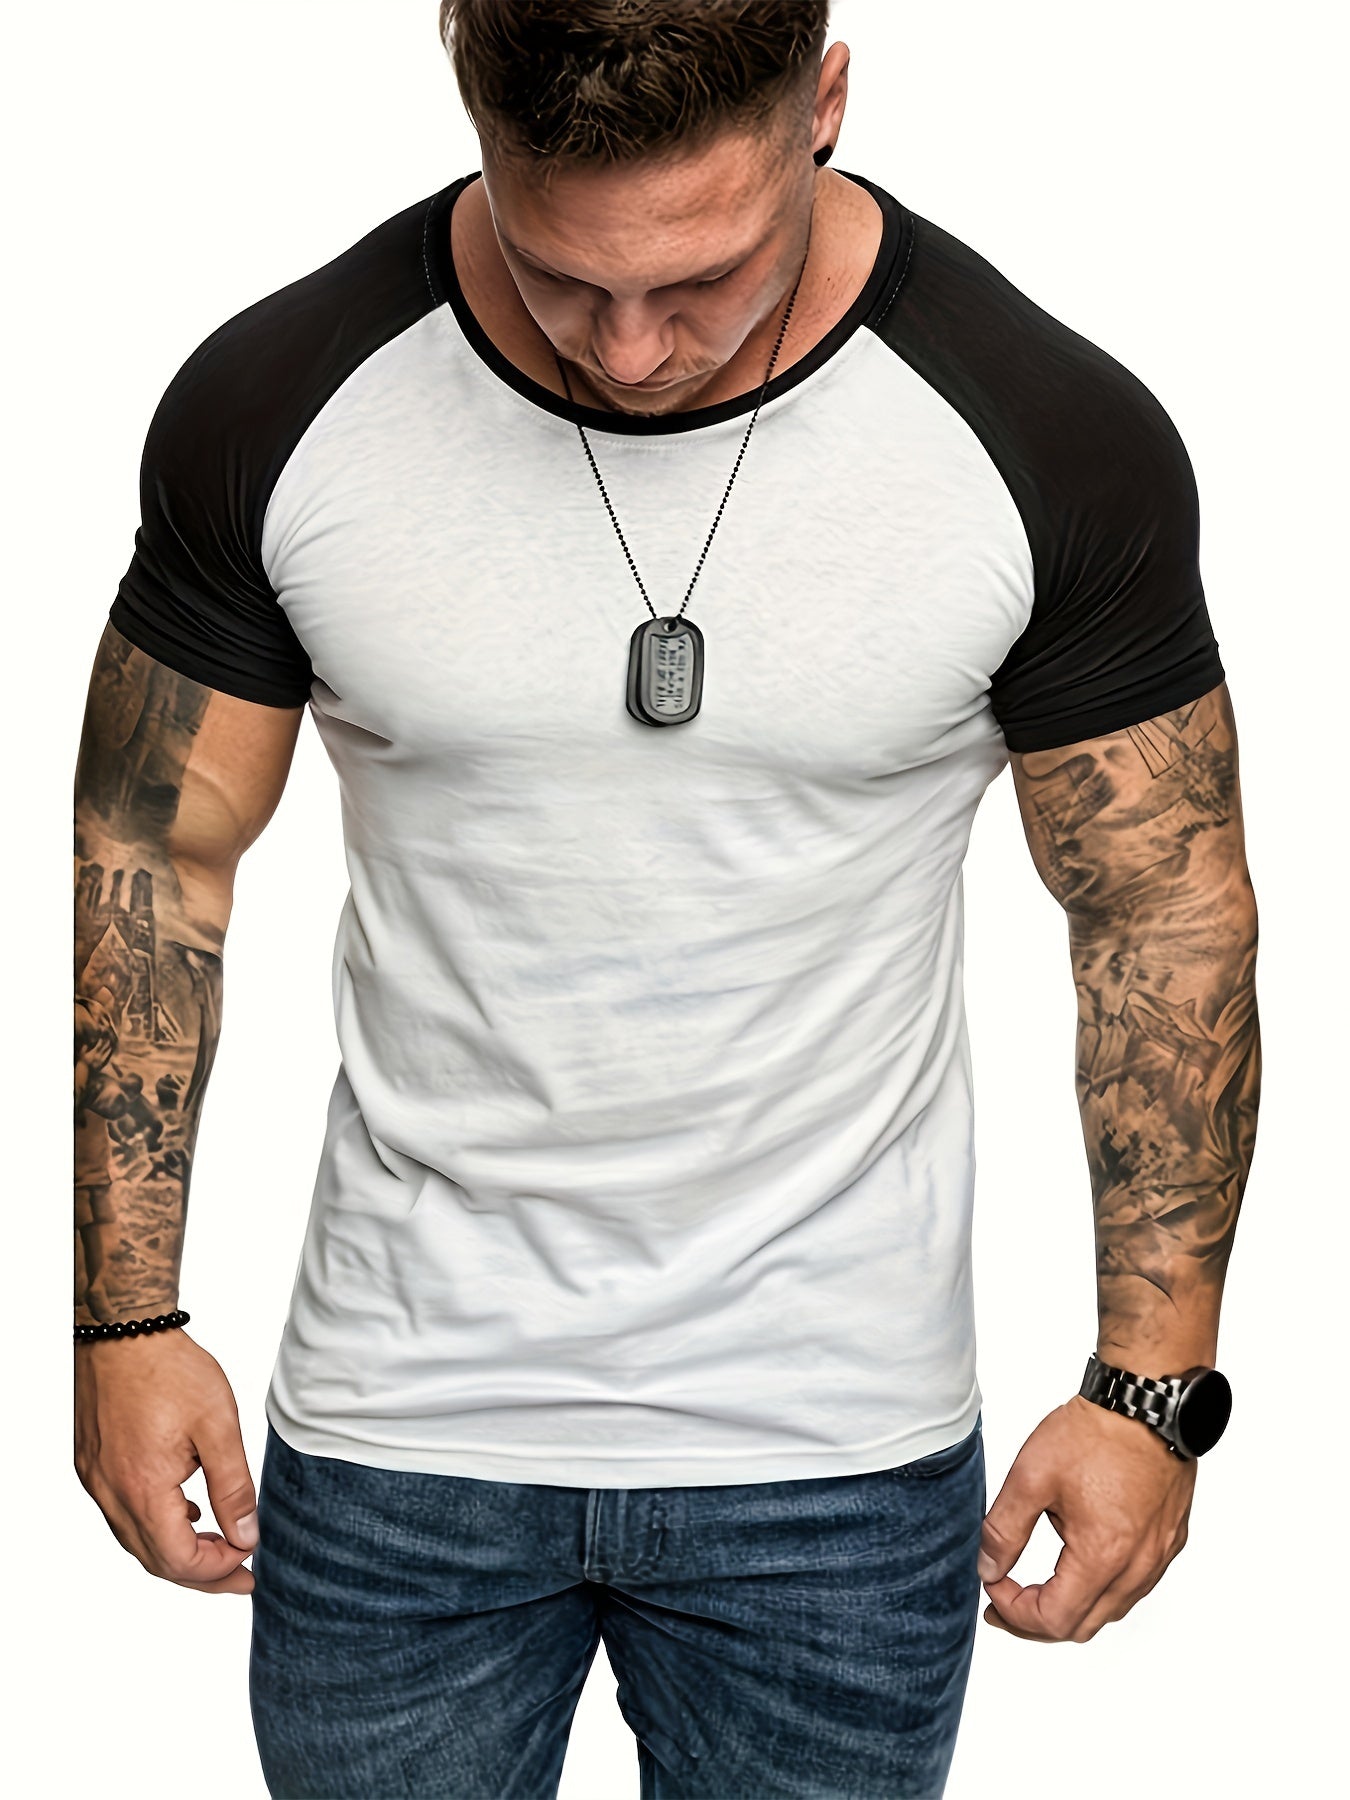 Men's Raglan Sleeve T-shirt, Men's Summer Fitness Clothes, Men's Outfits